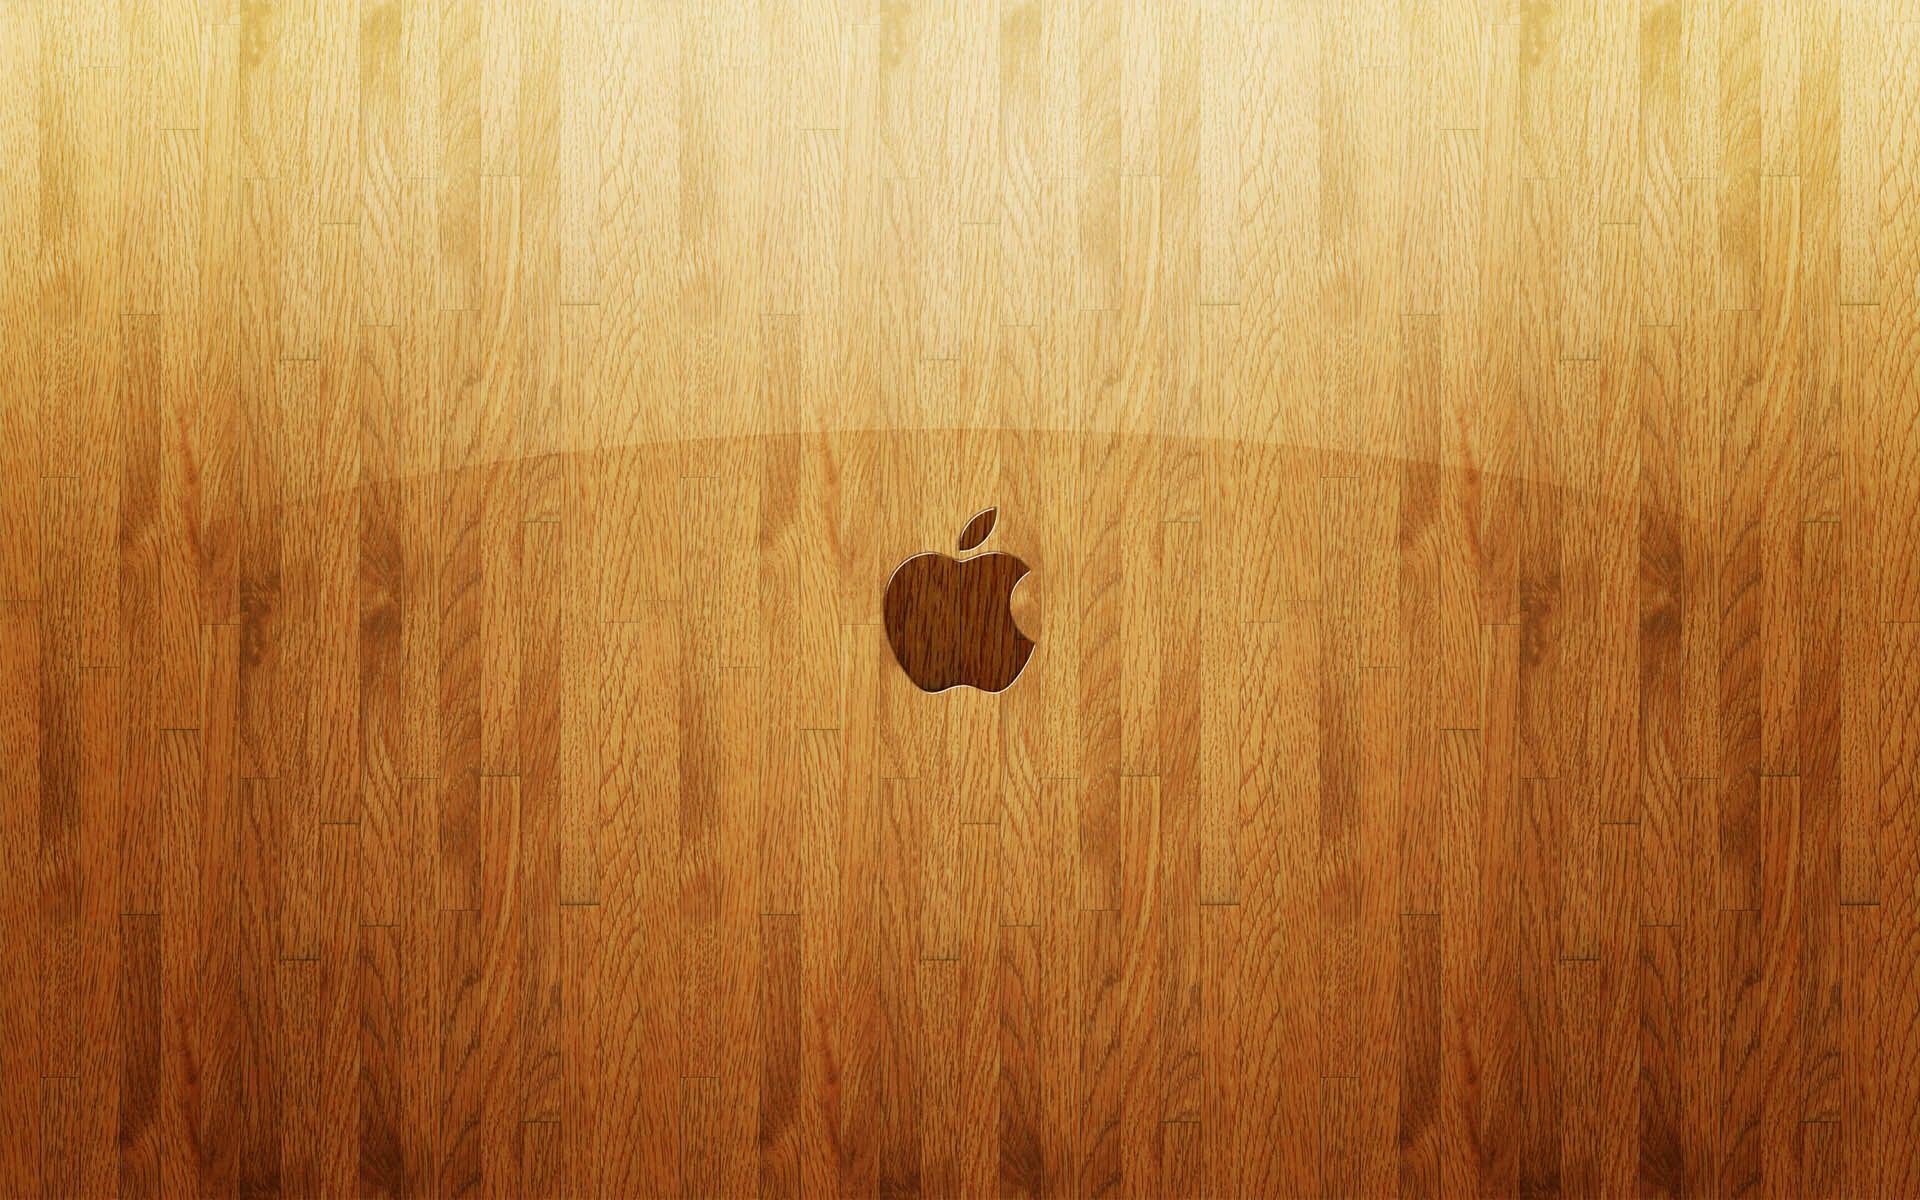 Apple Logo on Wood Background desktop wallpaper | WallpaperPixel